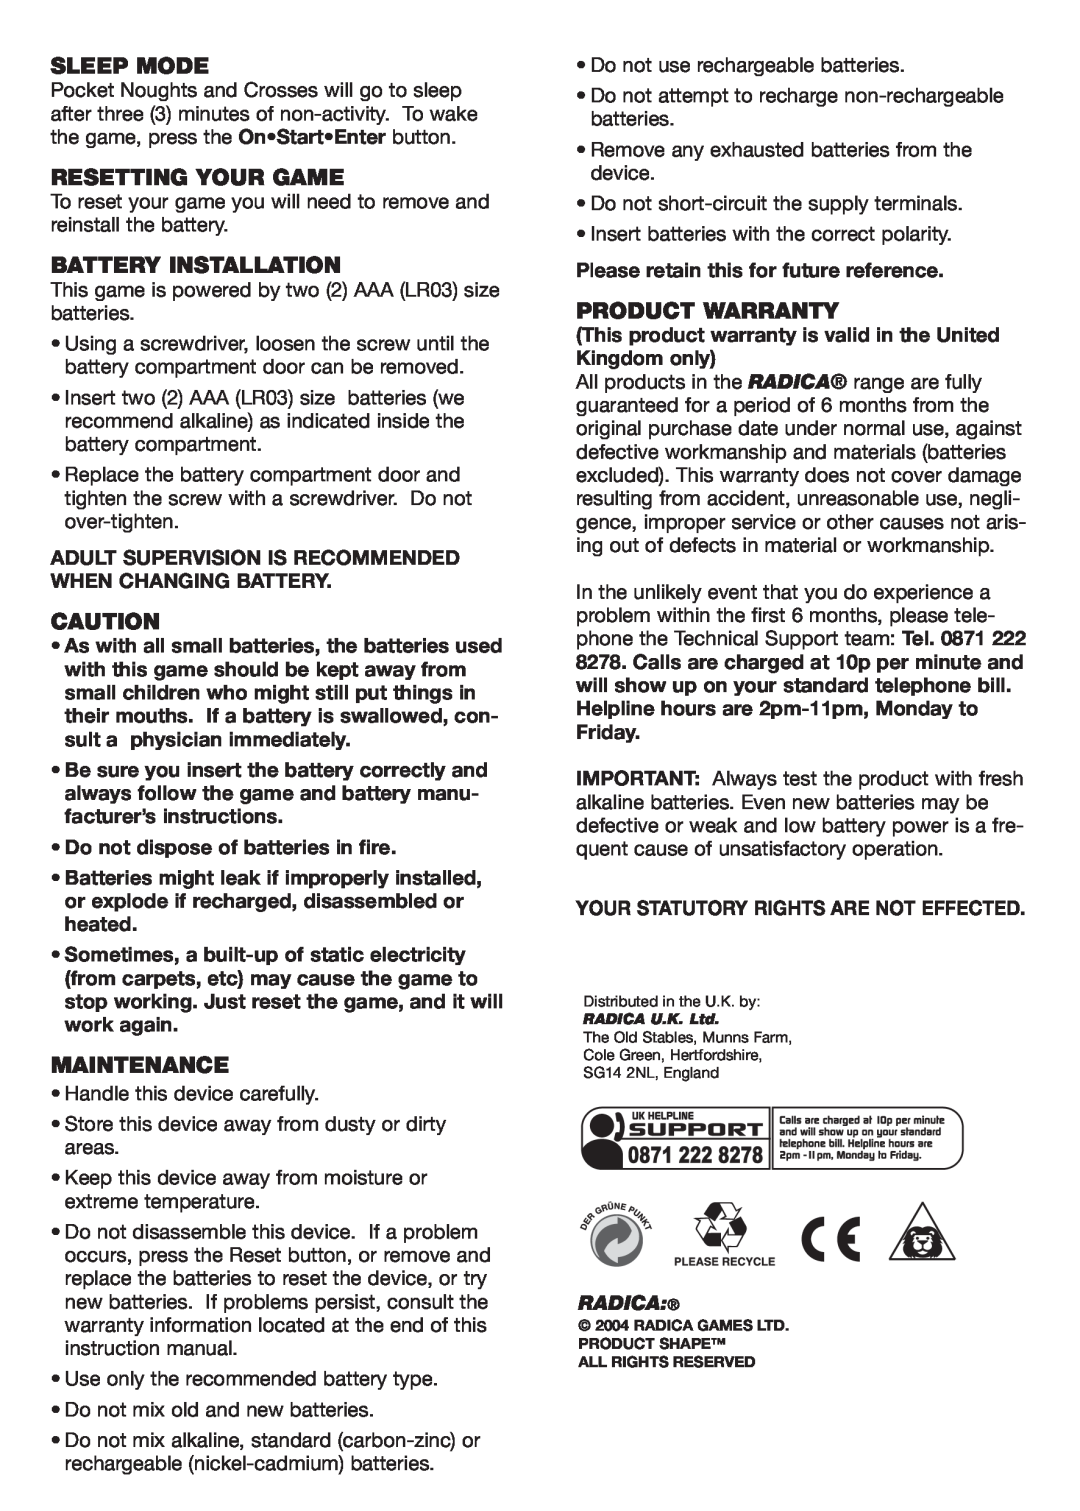 Radica Games 75011 Sleep Mode, Resetting Your Game, Battery Installation, Maintenance, Product Warranty, Radica 